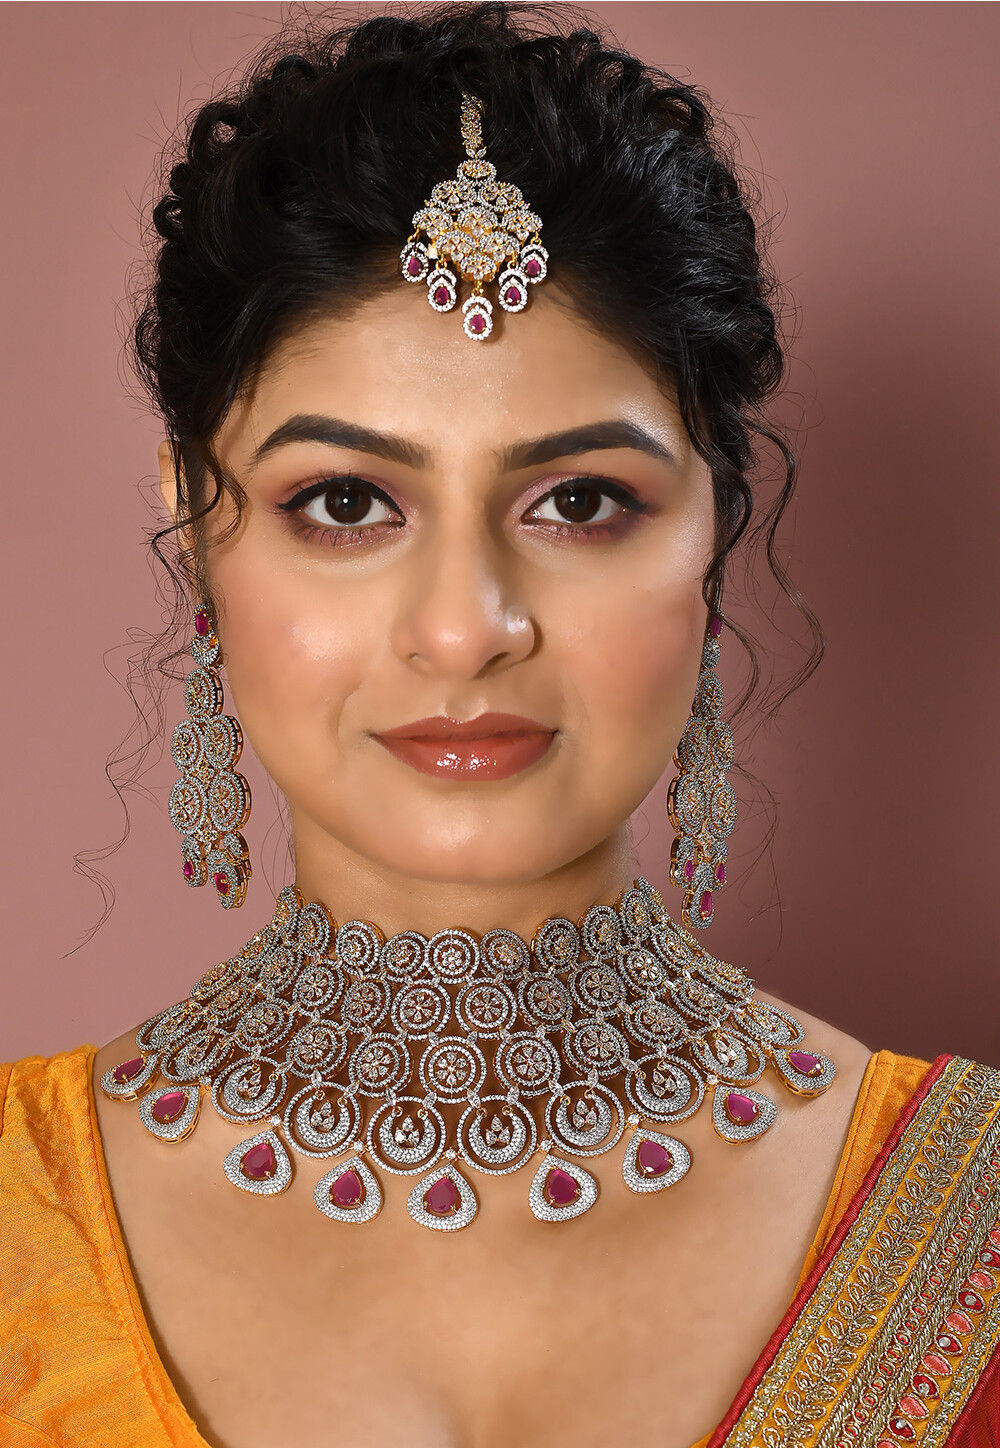 American Diamond Studded Indian Bridal Necklace Set